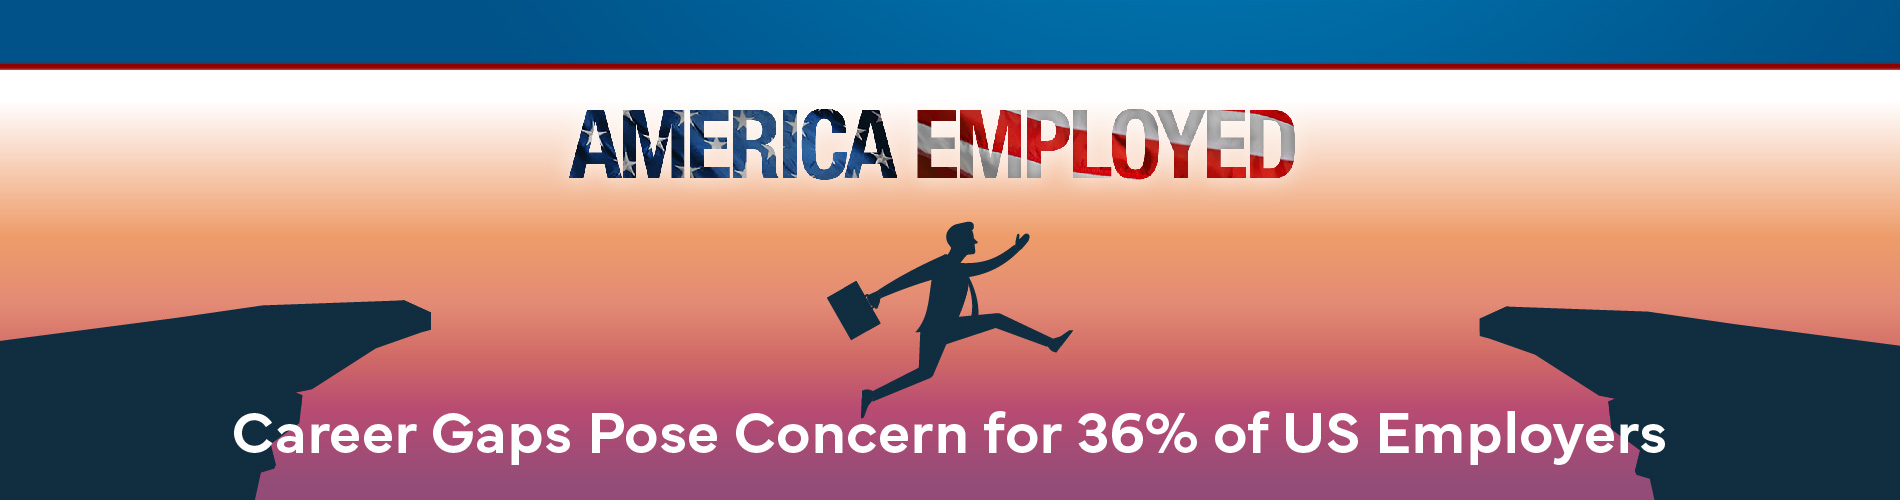 5-15-24 Career Gaps - America Employed